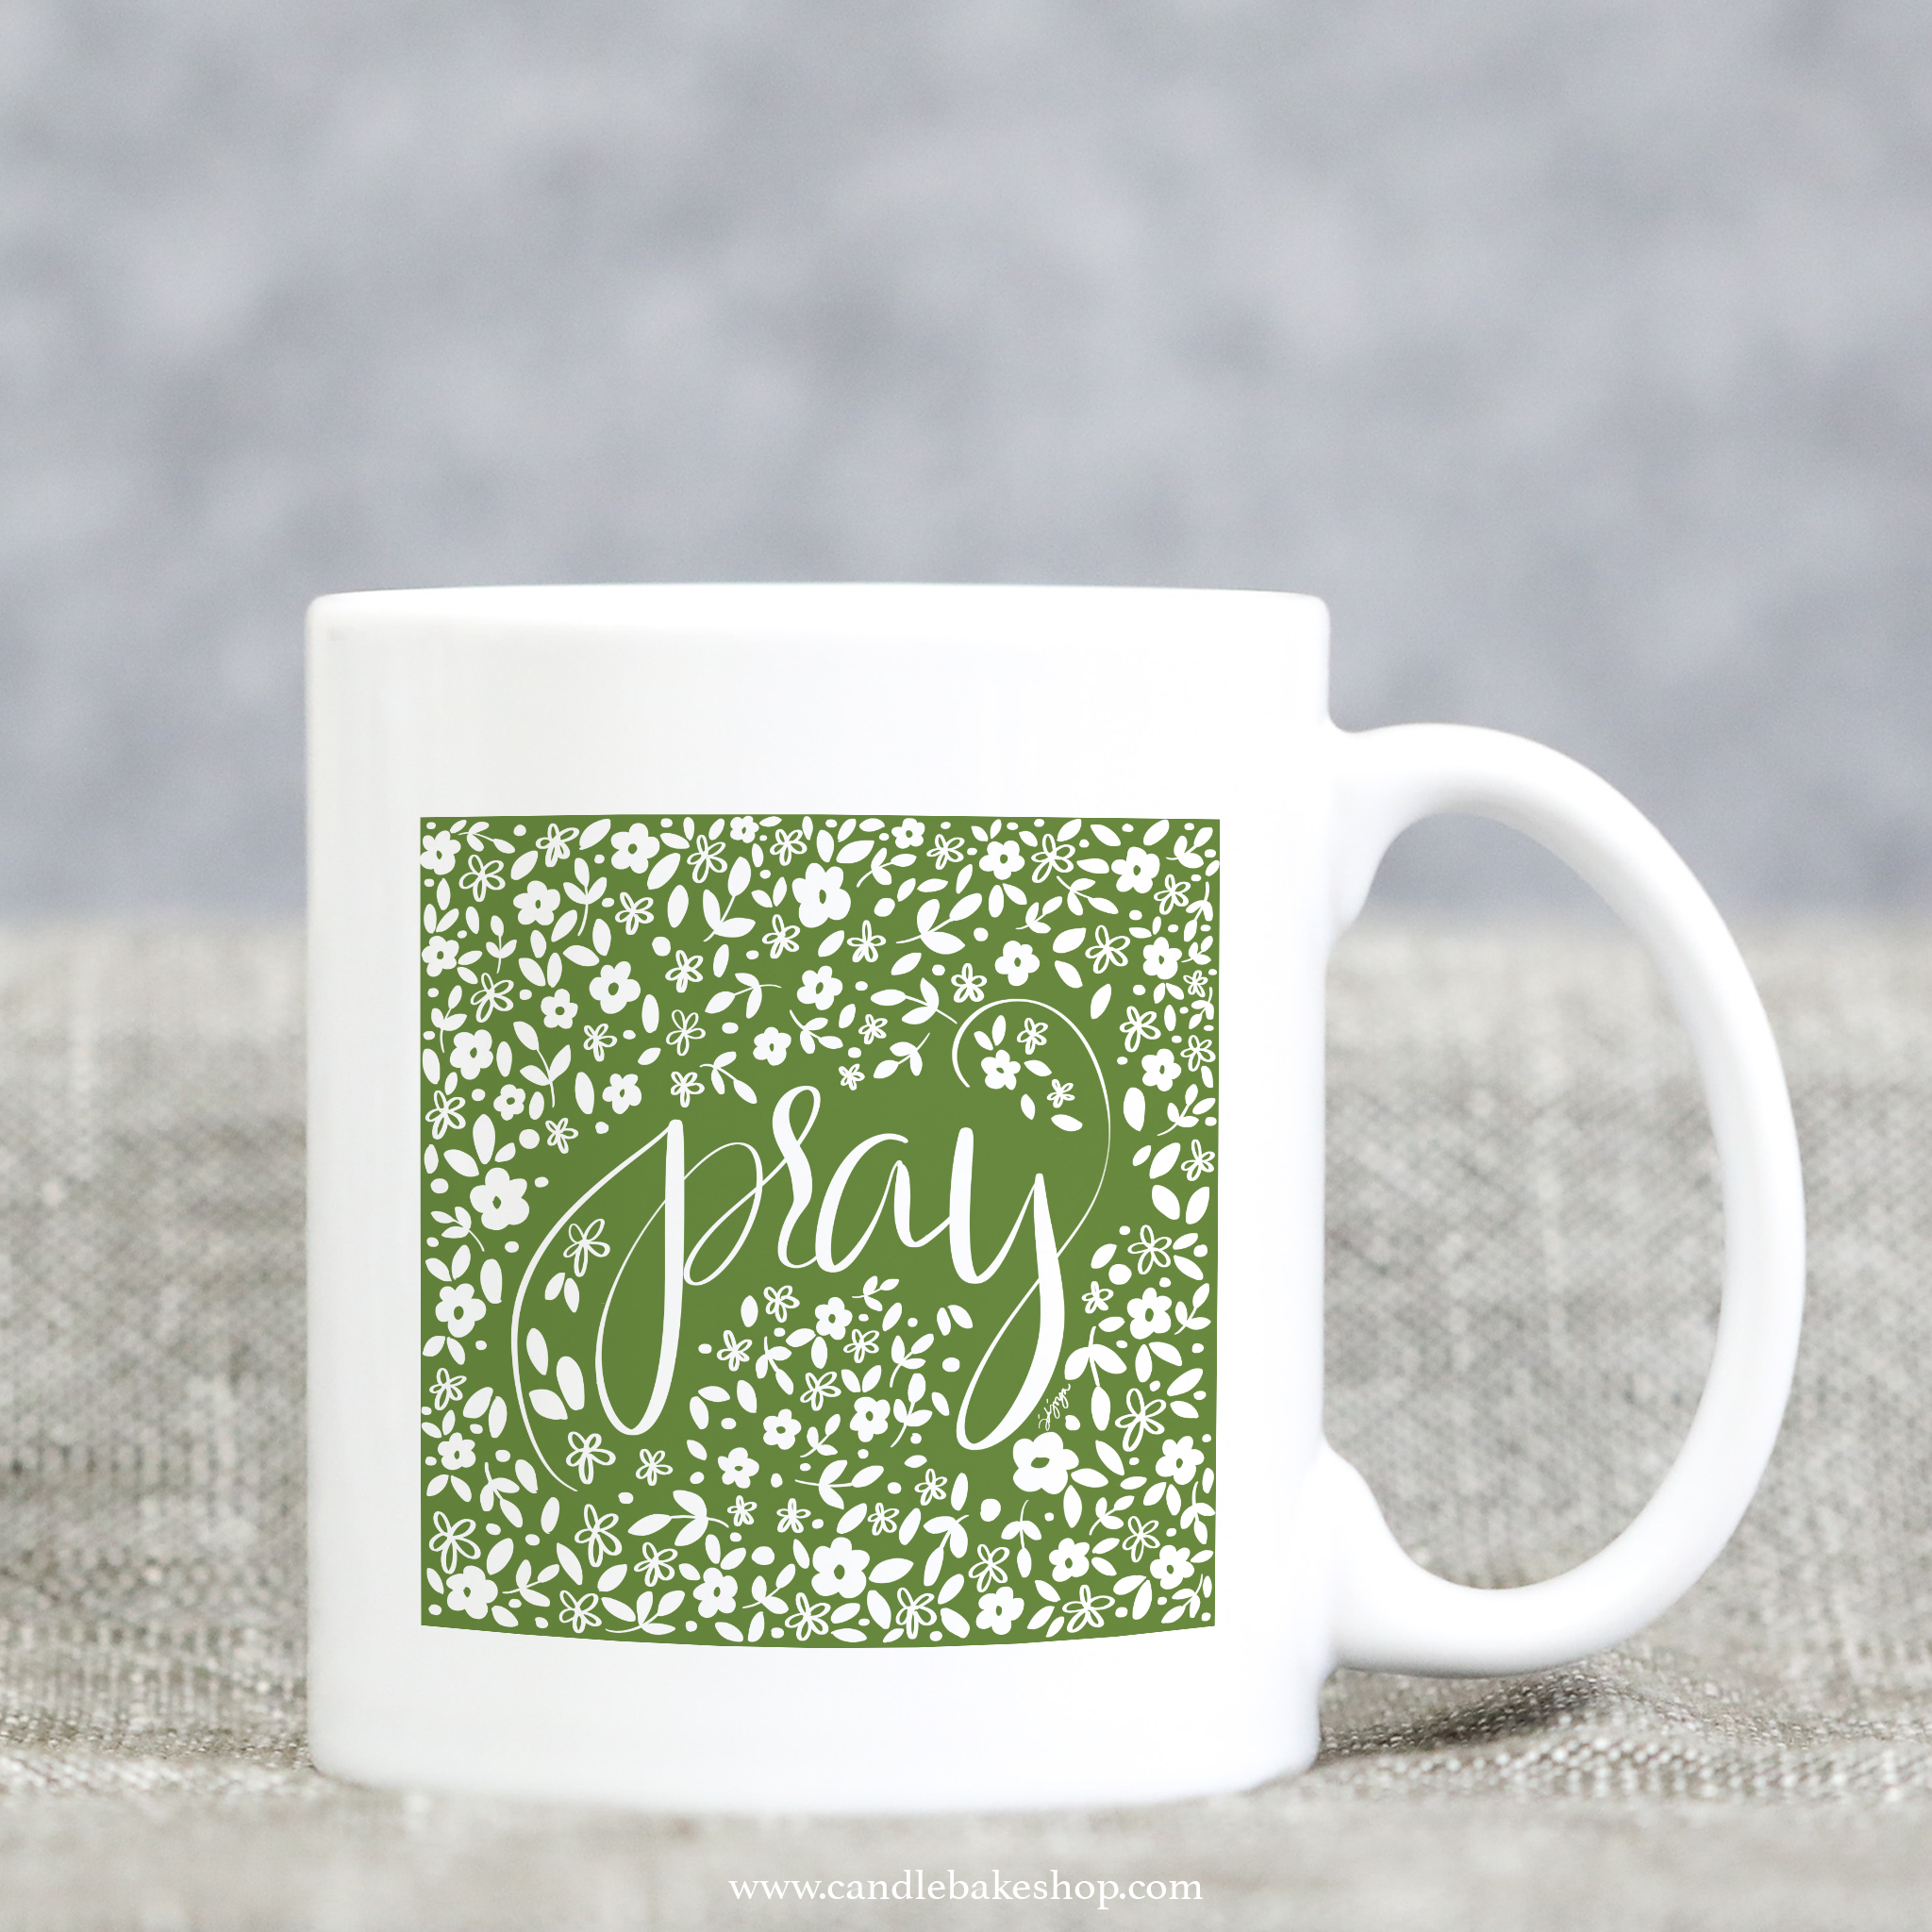 Vintage Inspired Coffee Mug - Pray (Spring Blossoms On Green)